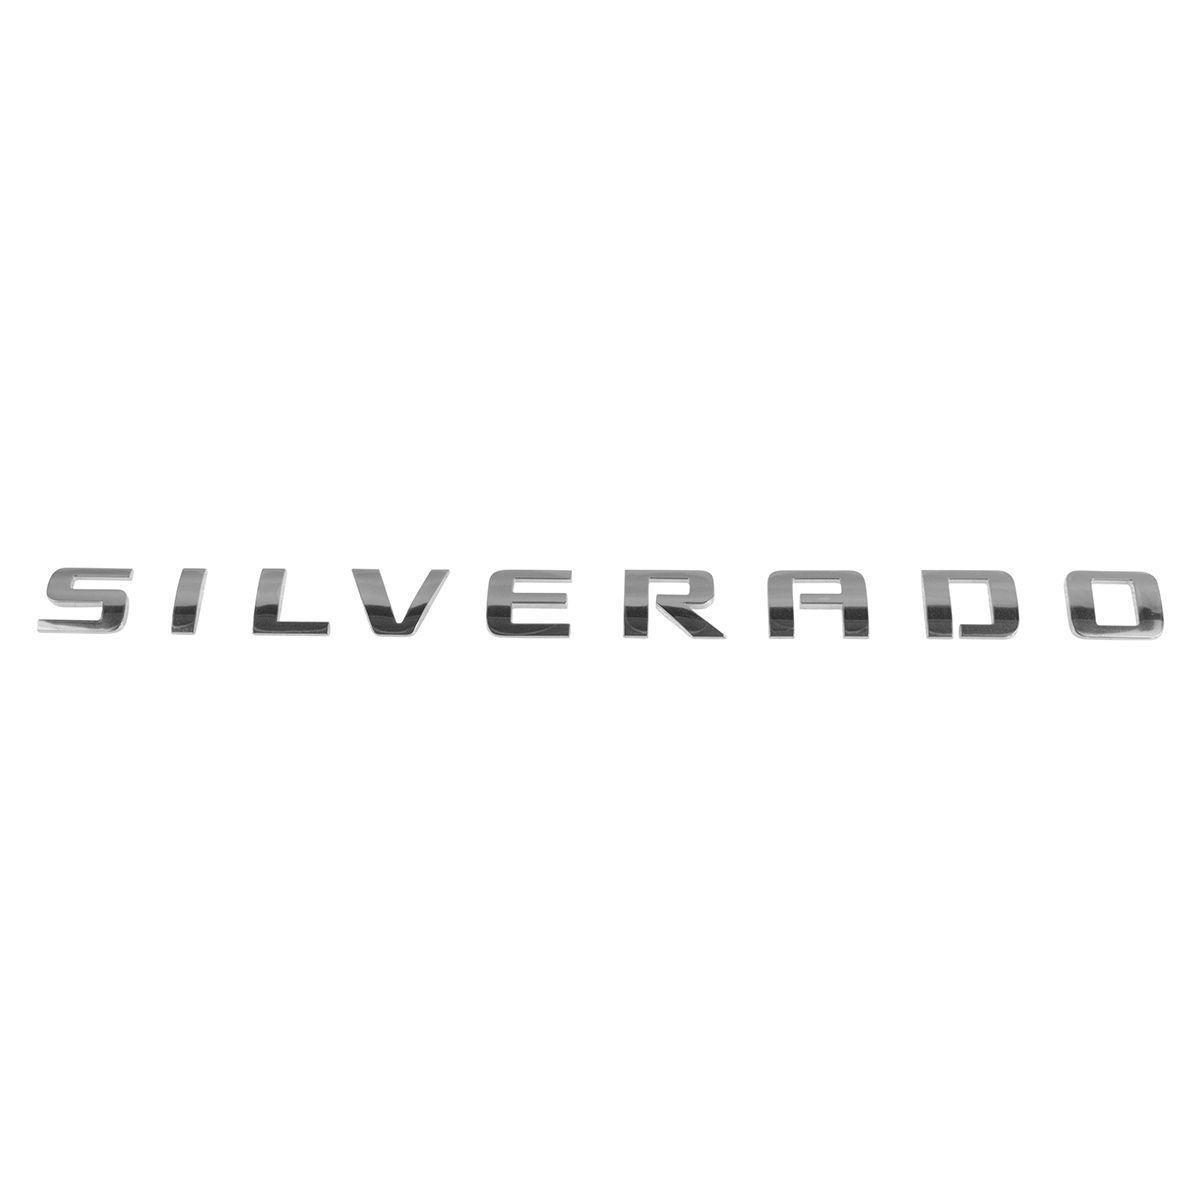 Silverado Logo - Details about OEM Emblem Letter Chrome Set Kit for Chevy Silverado 1500  2500 HD 3500 Hybrid